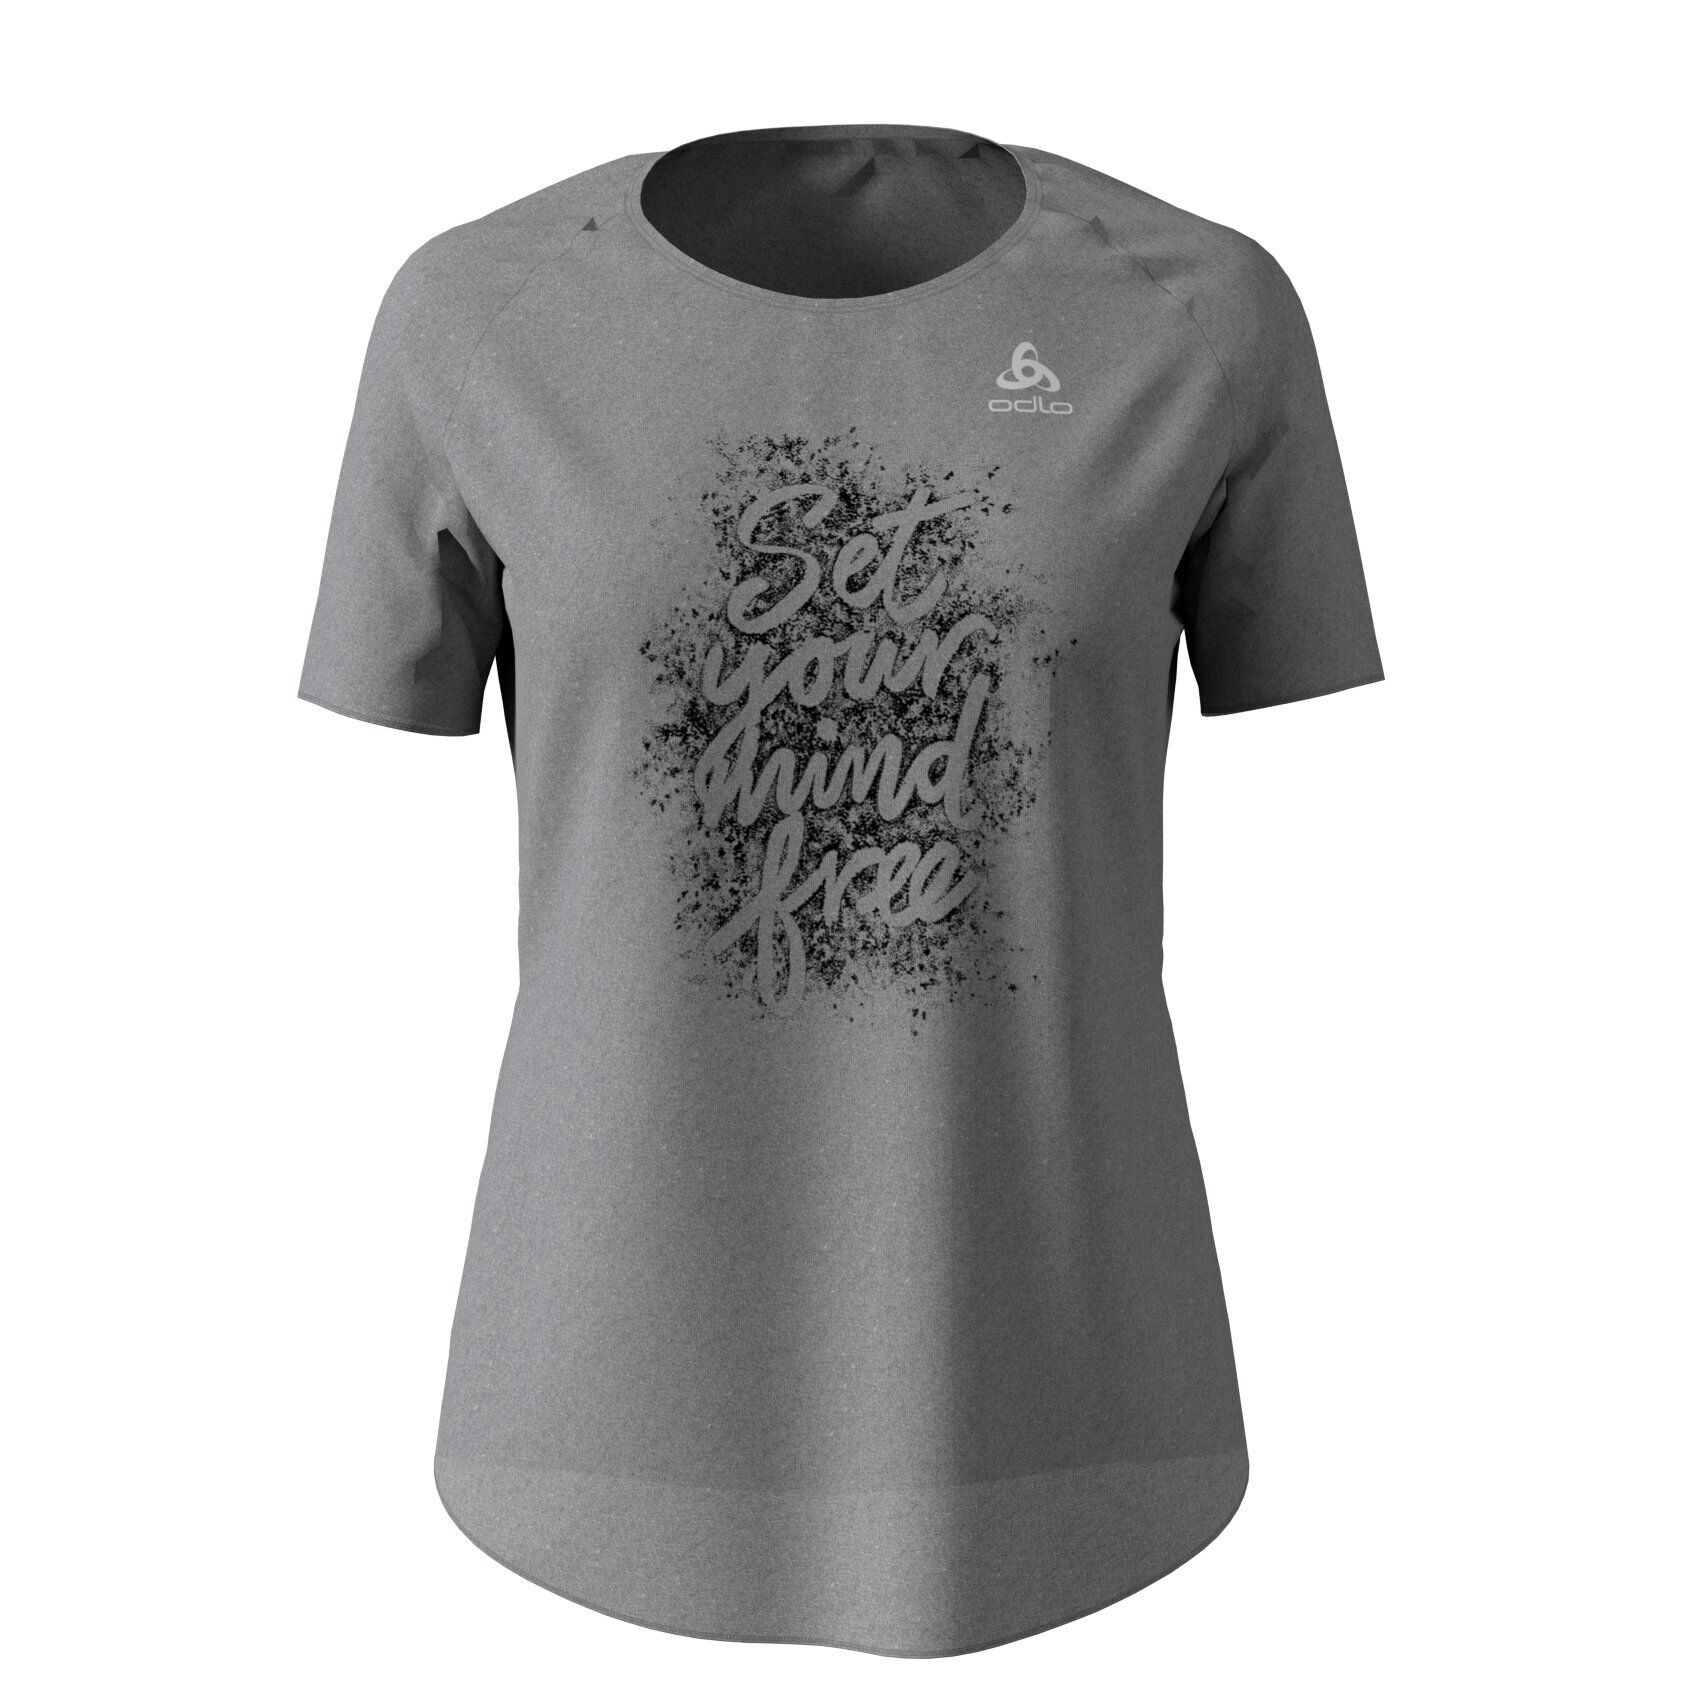 Odlo Millennium Element Print T-Shirt S/S Crew Neck - T-shirt - Women's